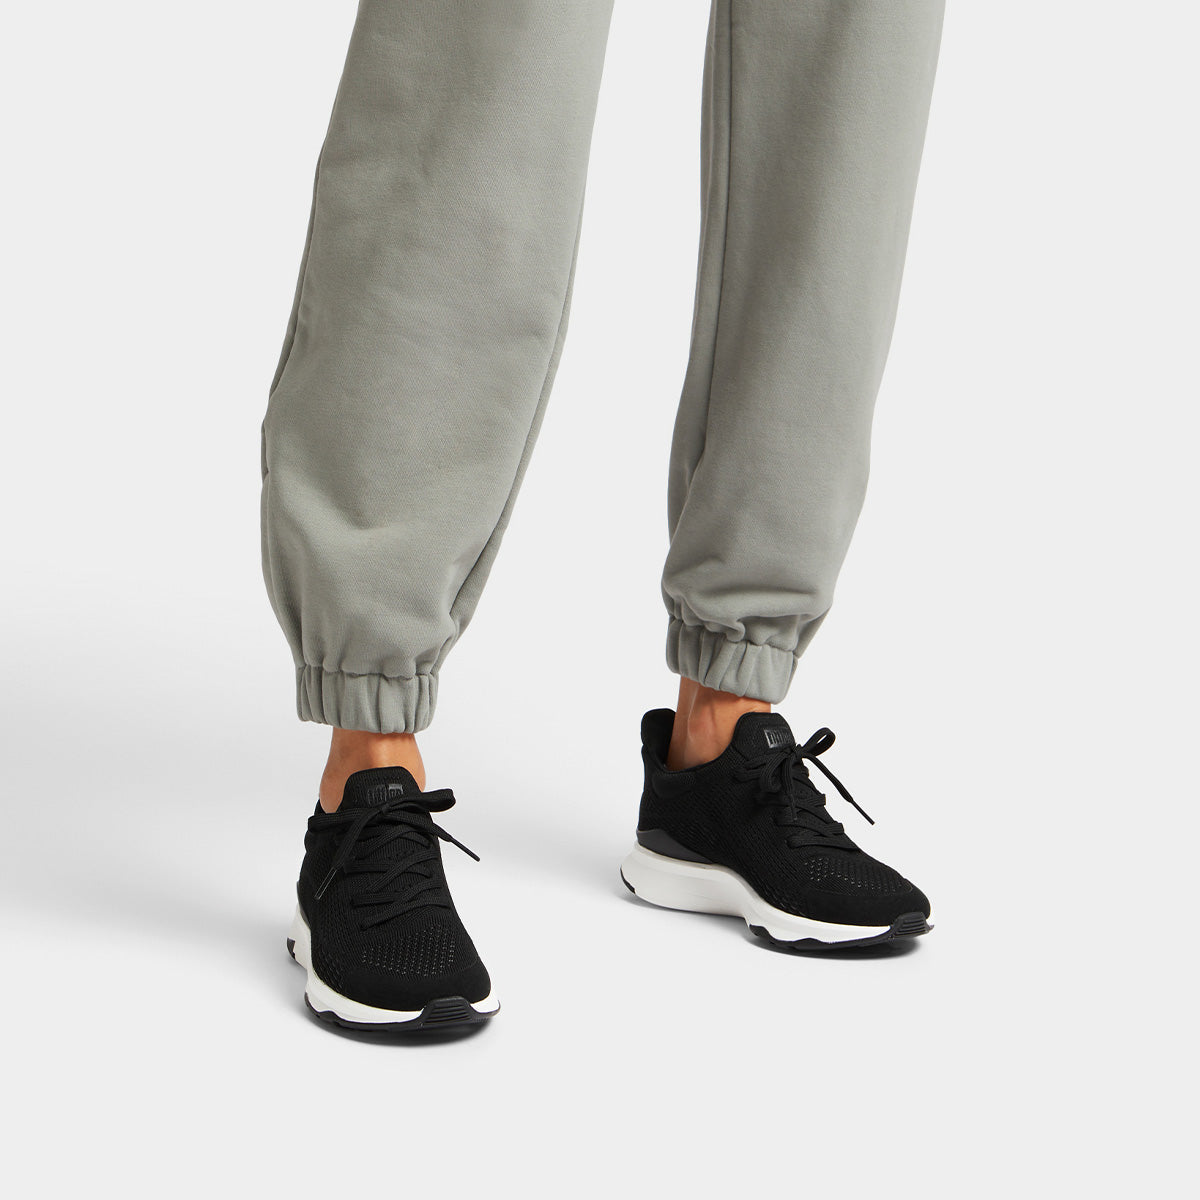 Fit-Flop Vitamin Ffx Knit Sports Sneakers Black נעלי פיט פלופ לנשים